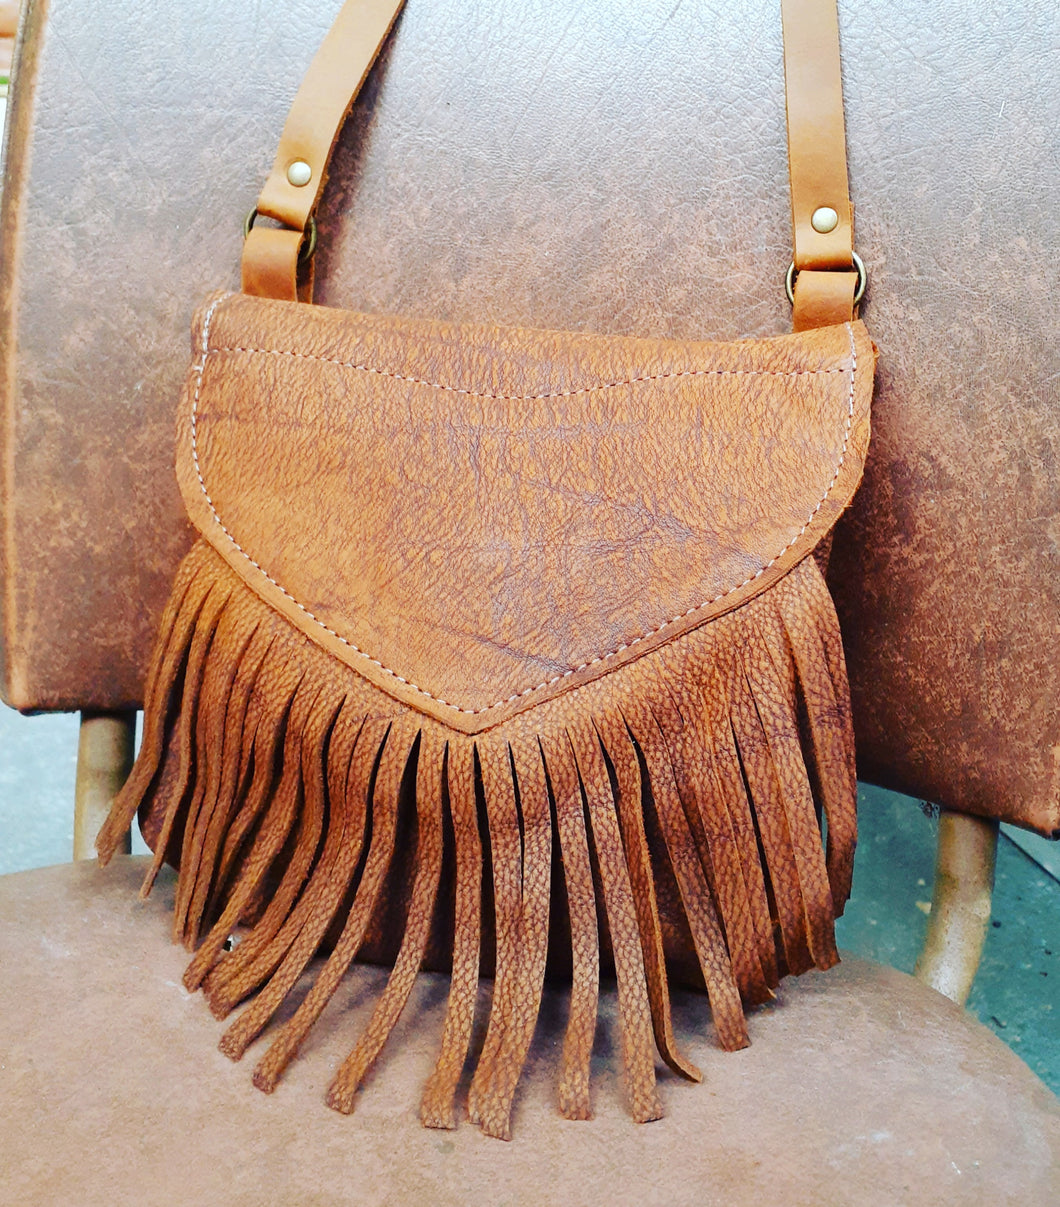 GOKTOW Black Fringe Purse Leather Bag Handbag,Vintage Boho Purses for  Women,Western Country Crossbody Tassel Bag: Handbags: Amazon.com